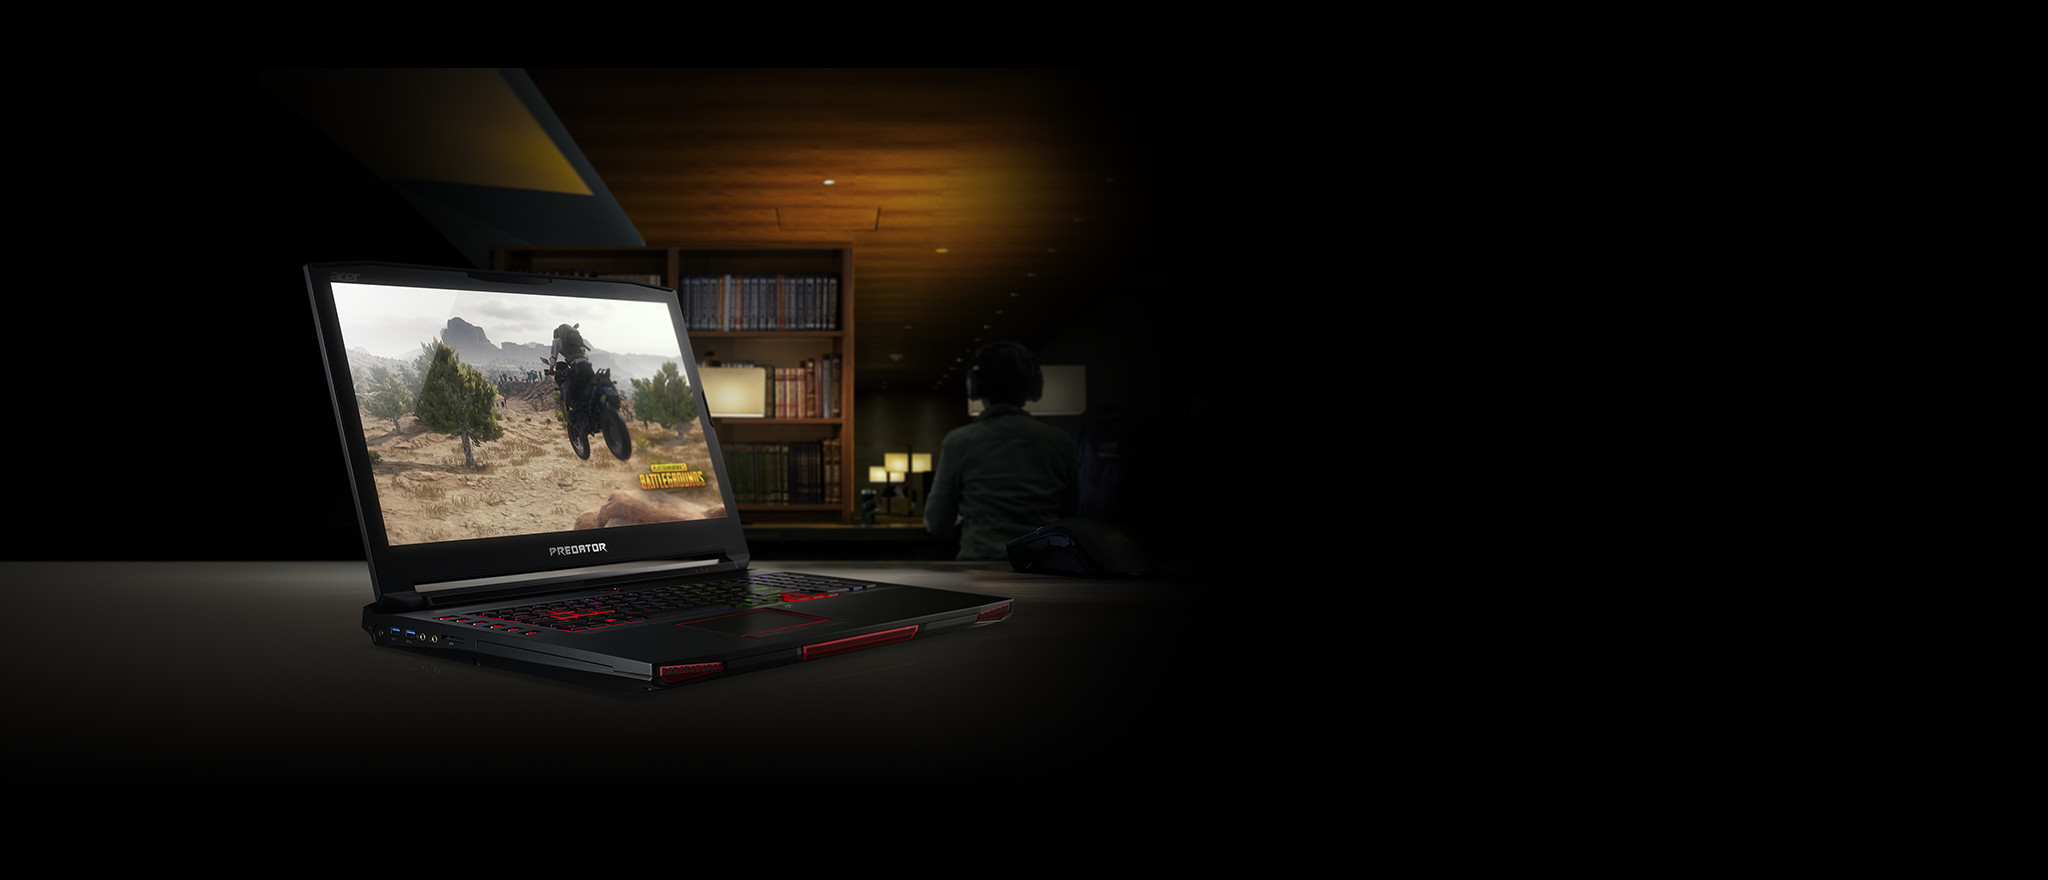 Nvidia: Win a GeForce GTX laptop